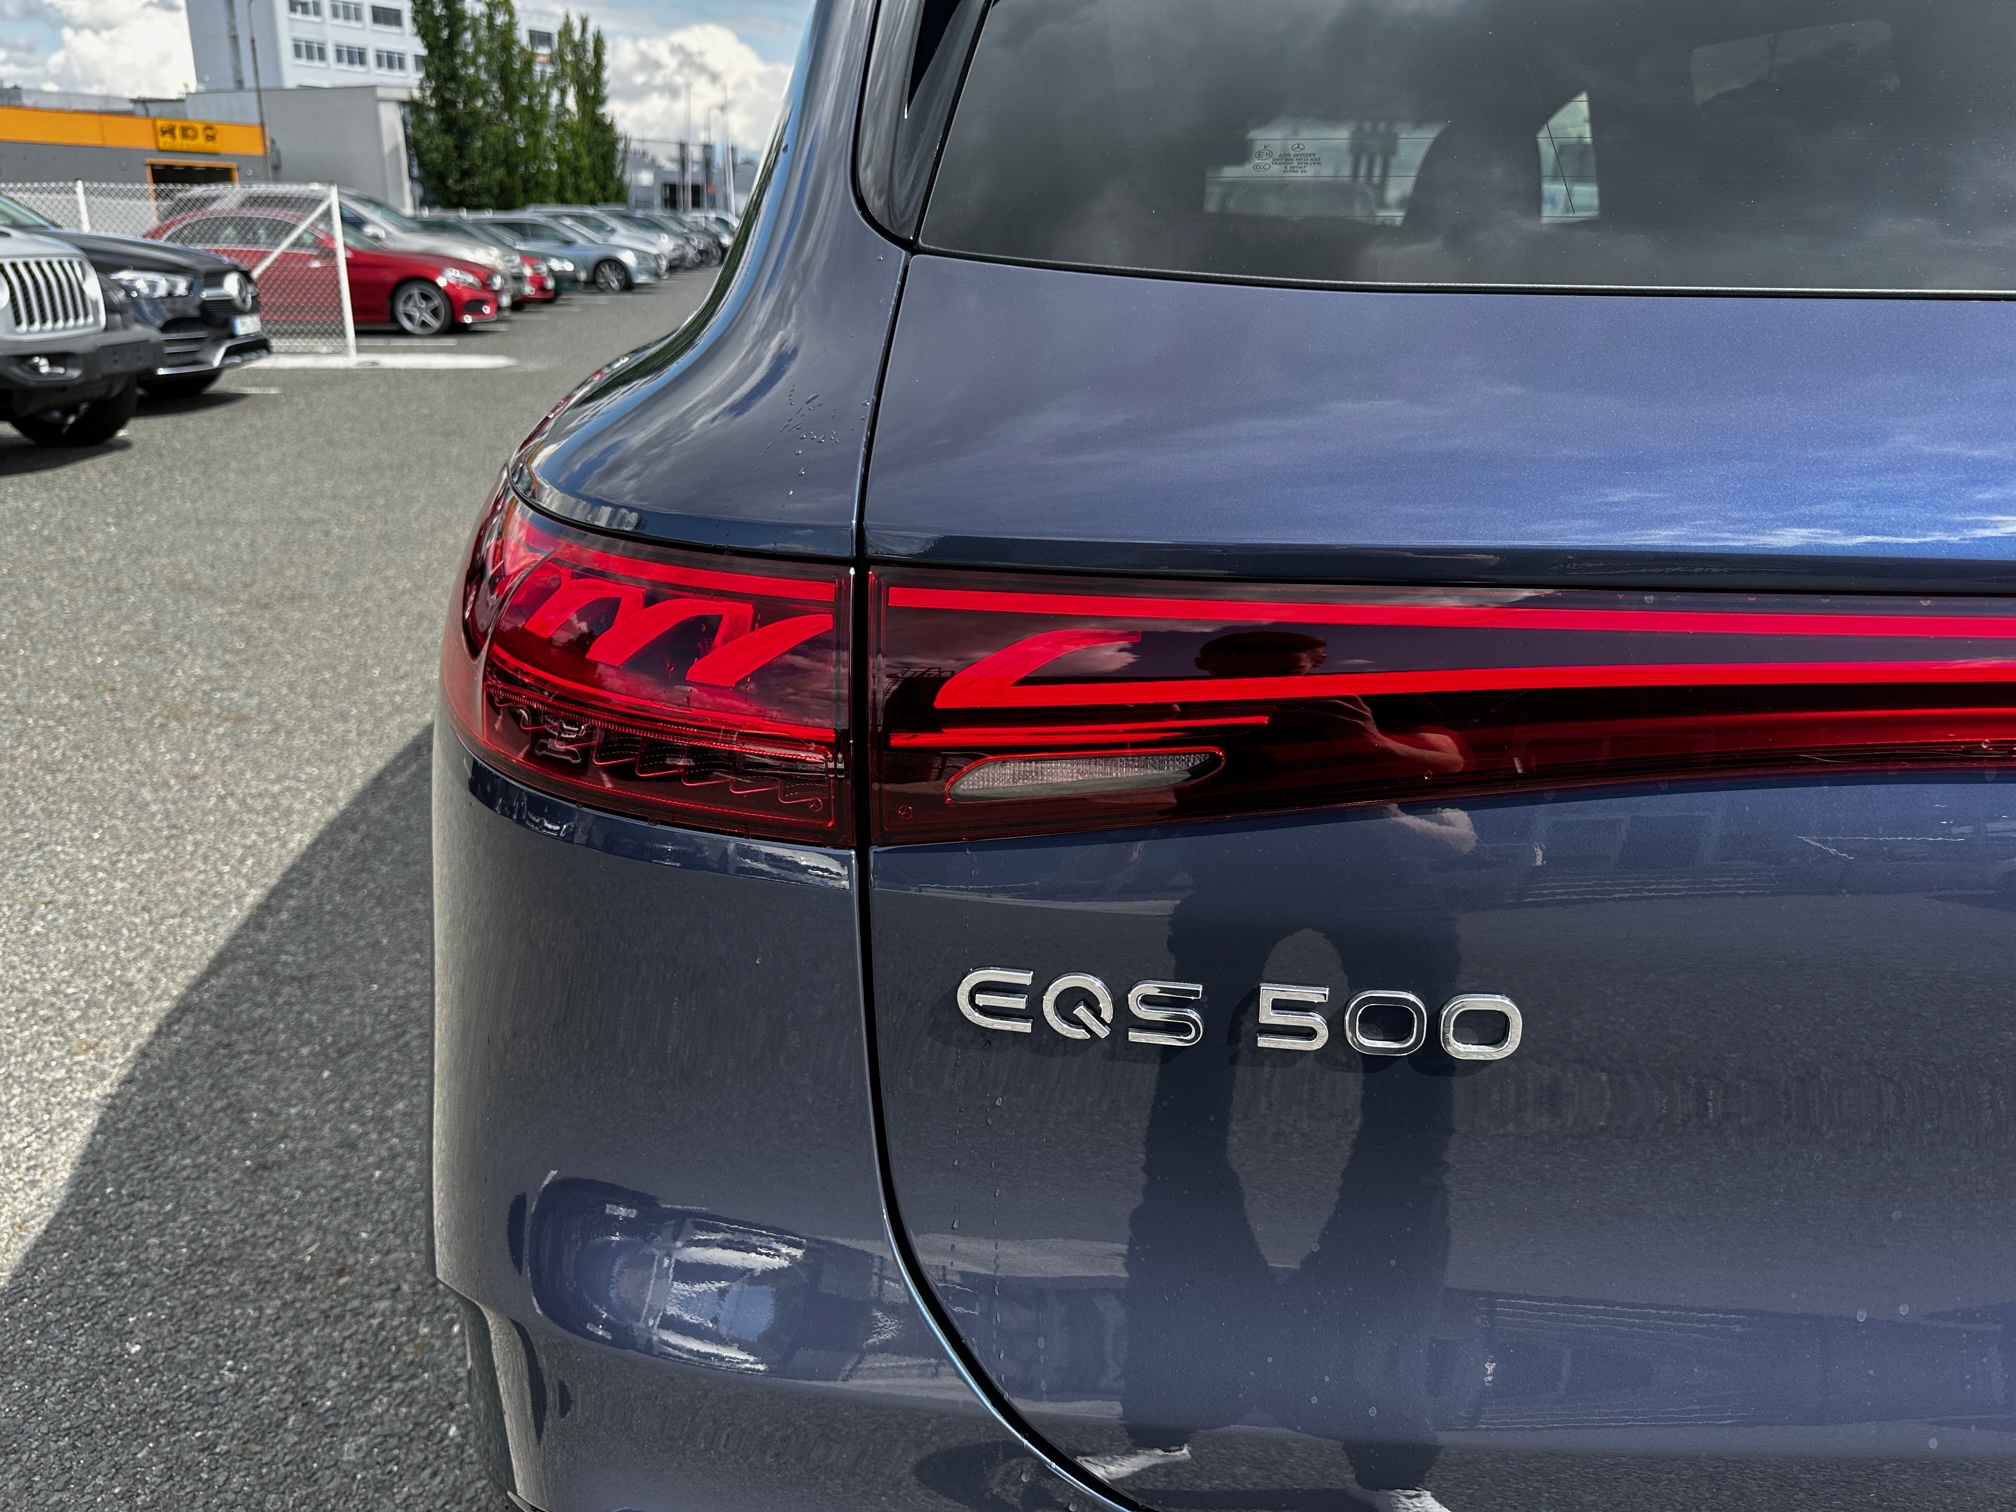 EQS 500 4MATIC SUV + poukaz na 25.000,-